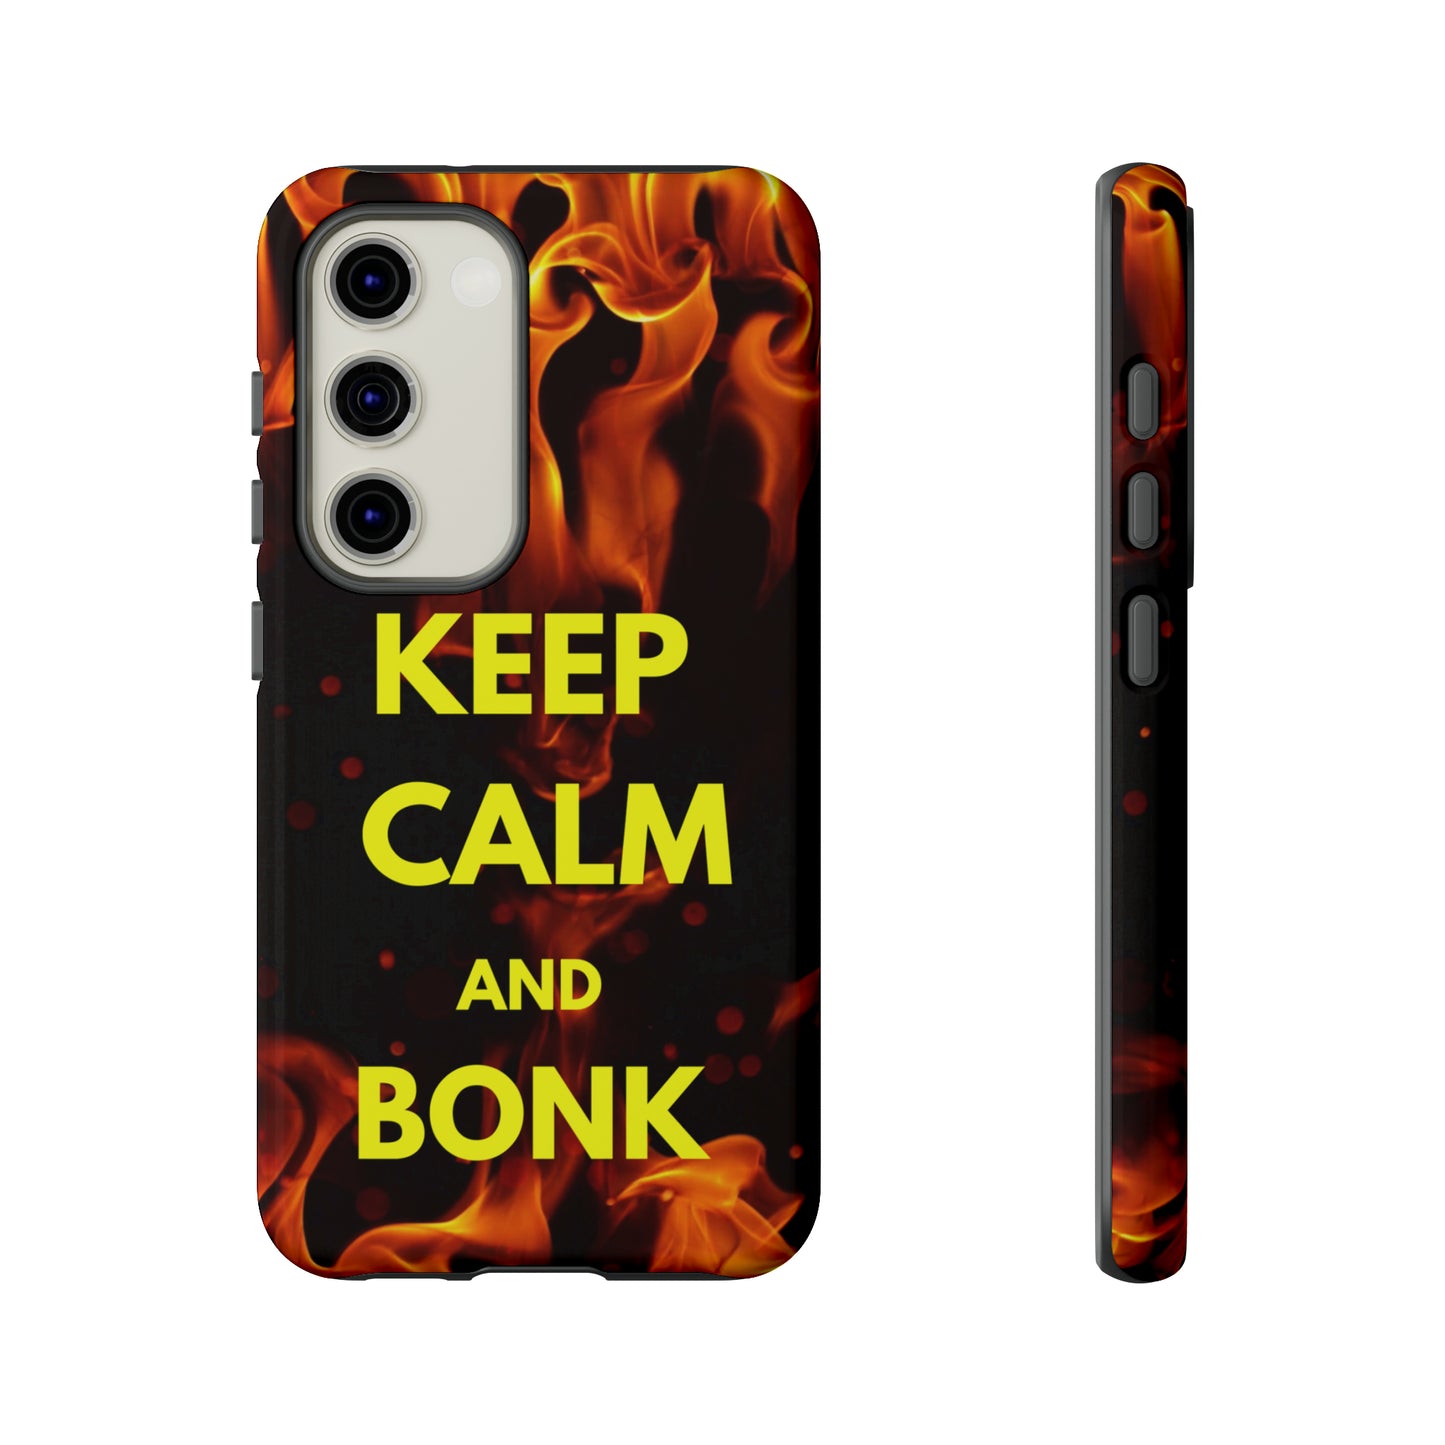 Keep Calm and Bonk Destiny 2 Themed Phone Case